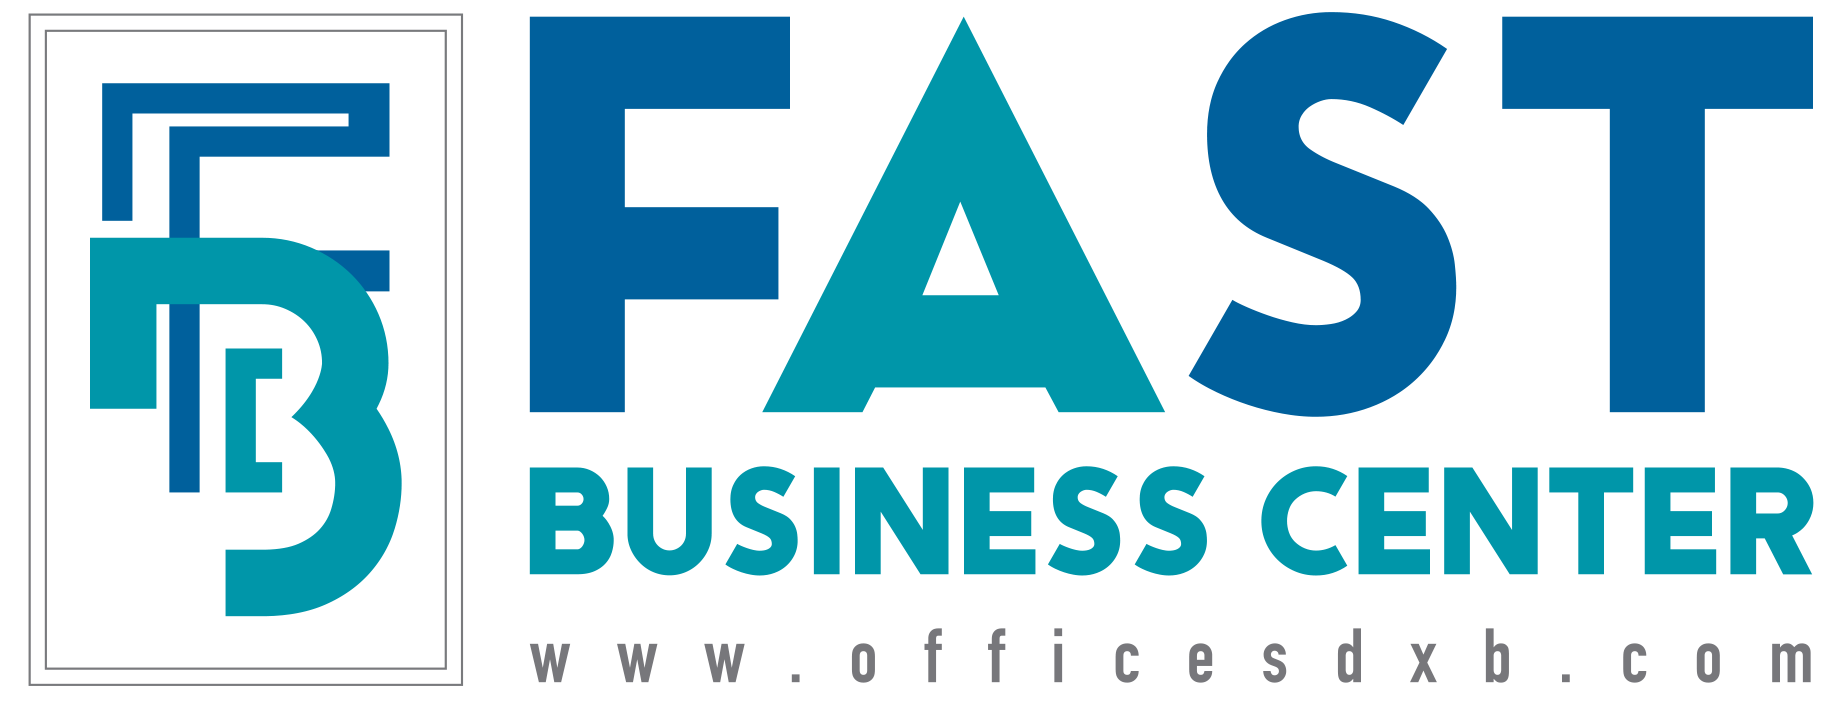 Fast Business Center Logo